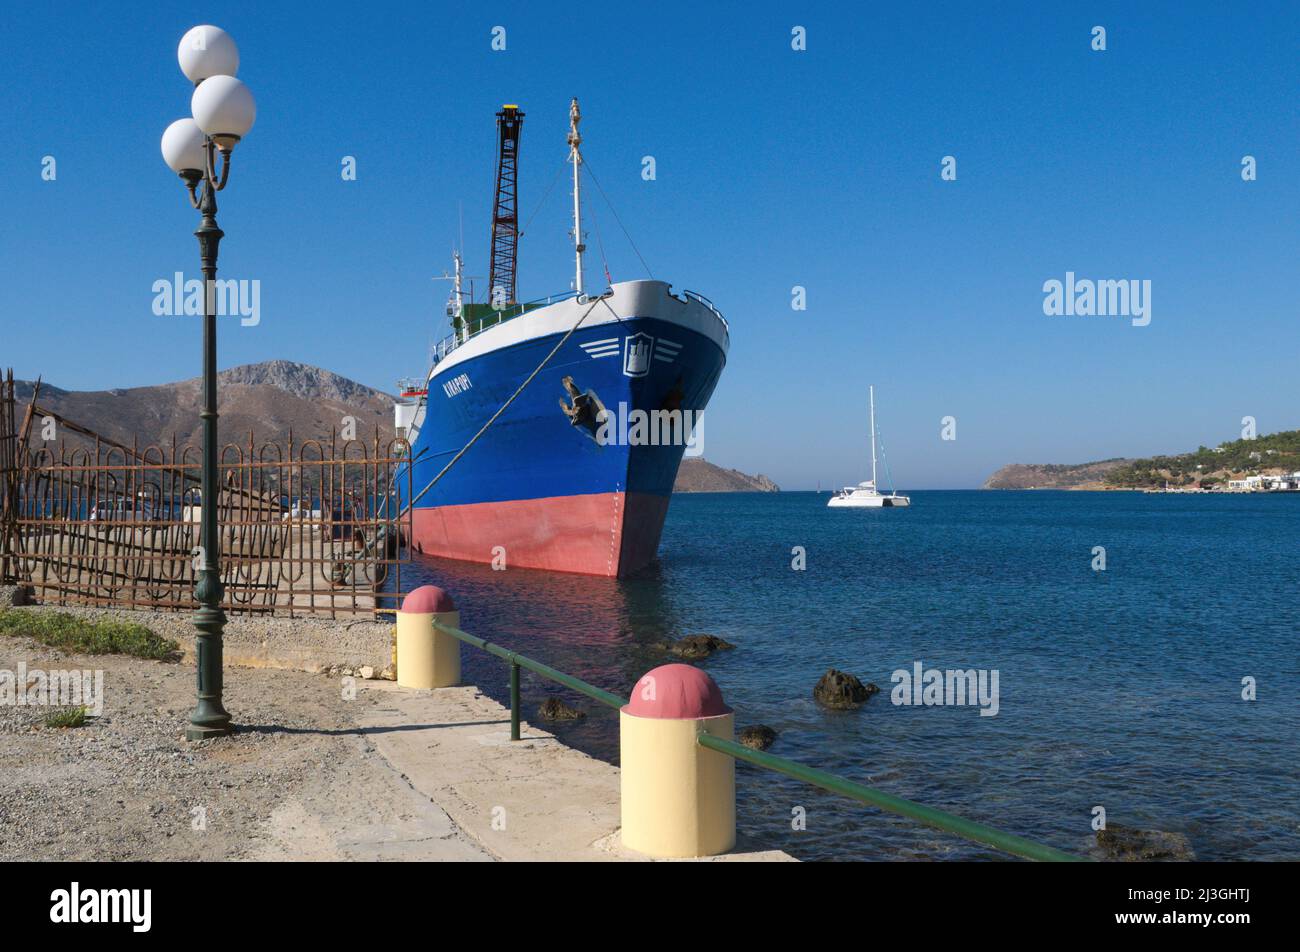 Ship docked in Lakki harbour, Leros Island, Dodecanese Islands, Greece Stock Photo